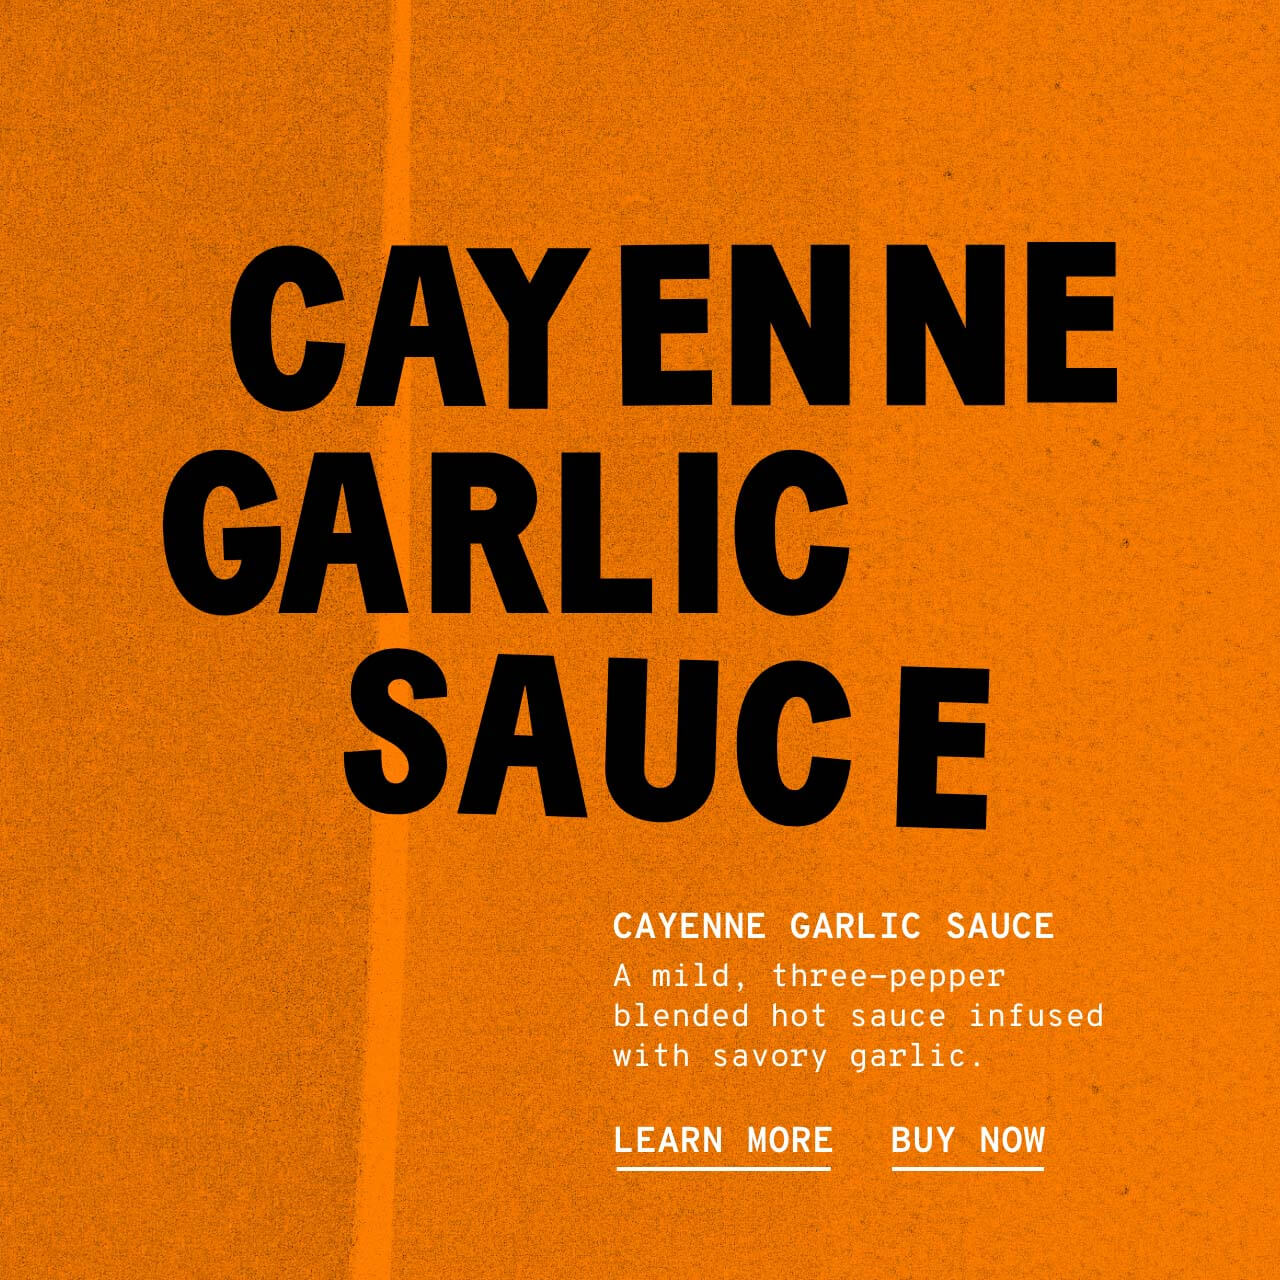 Cayene Garlic Sauce - Description